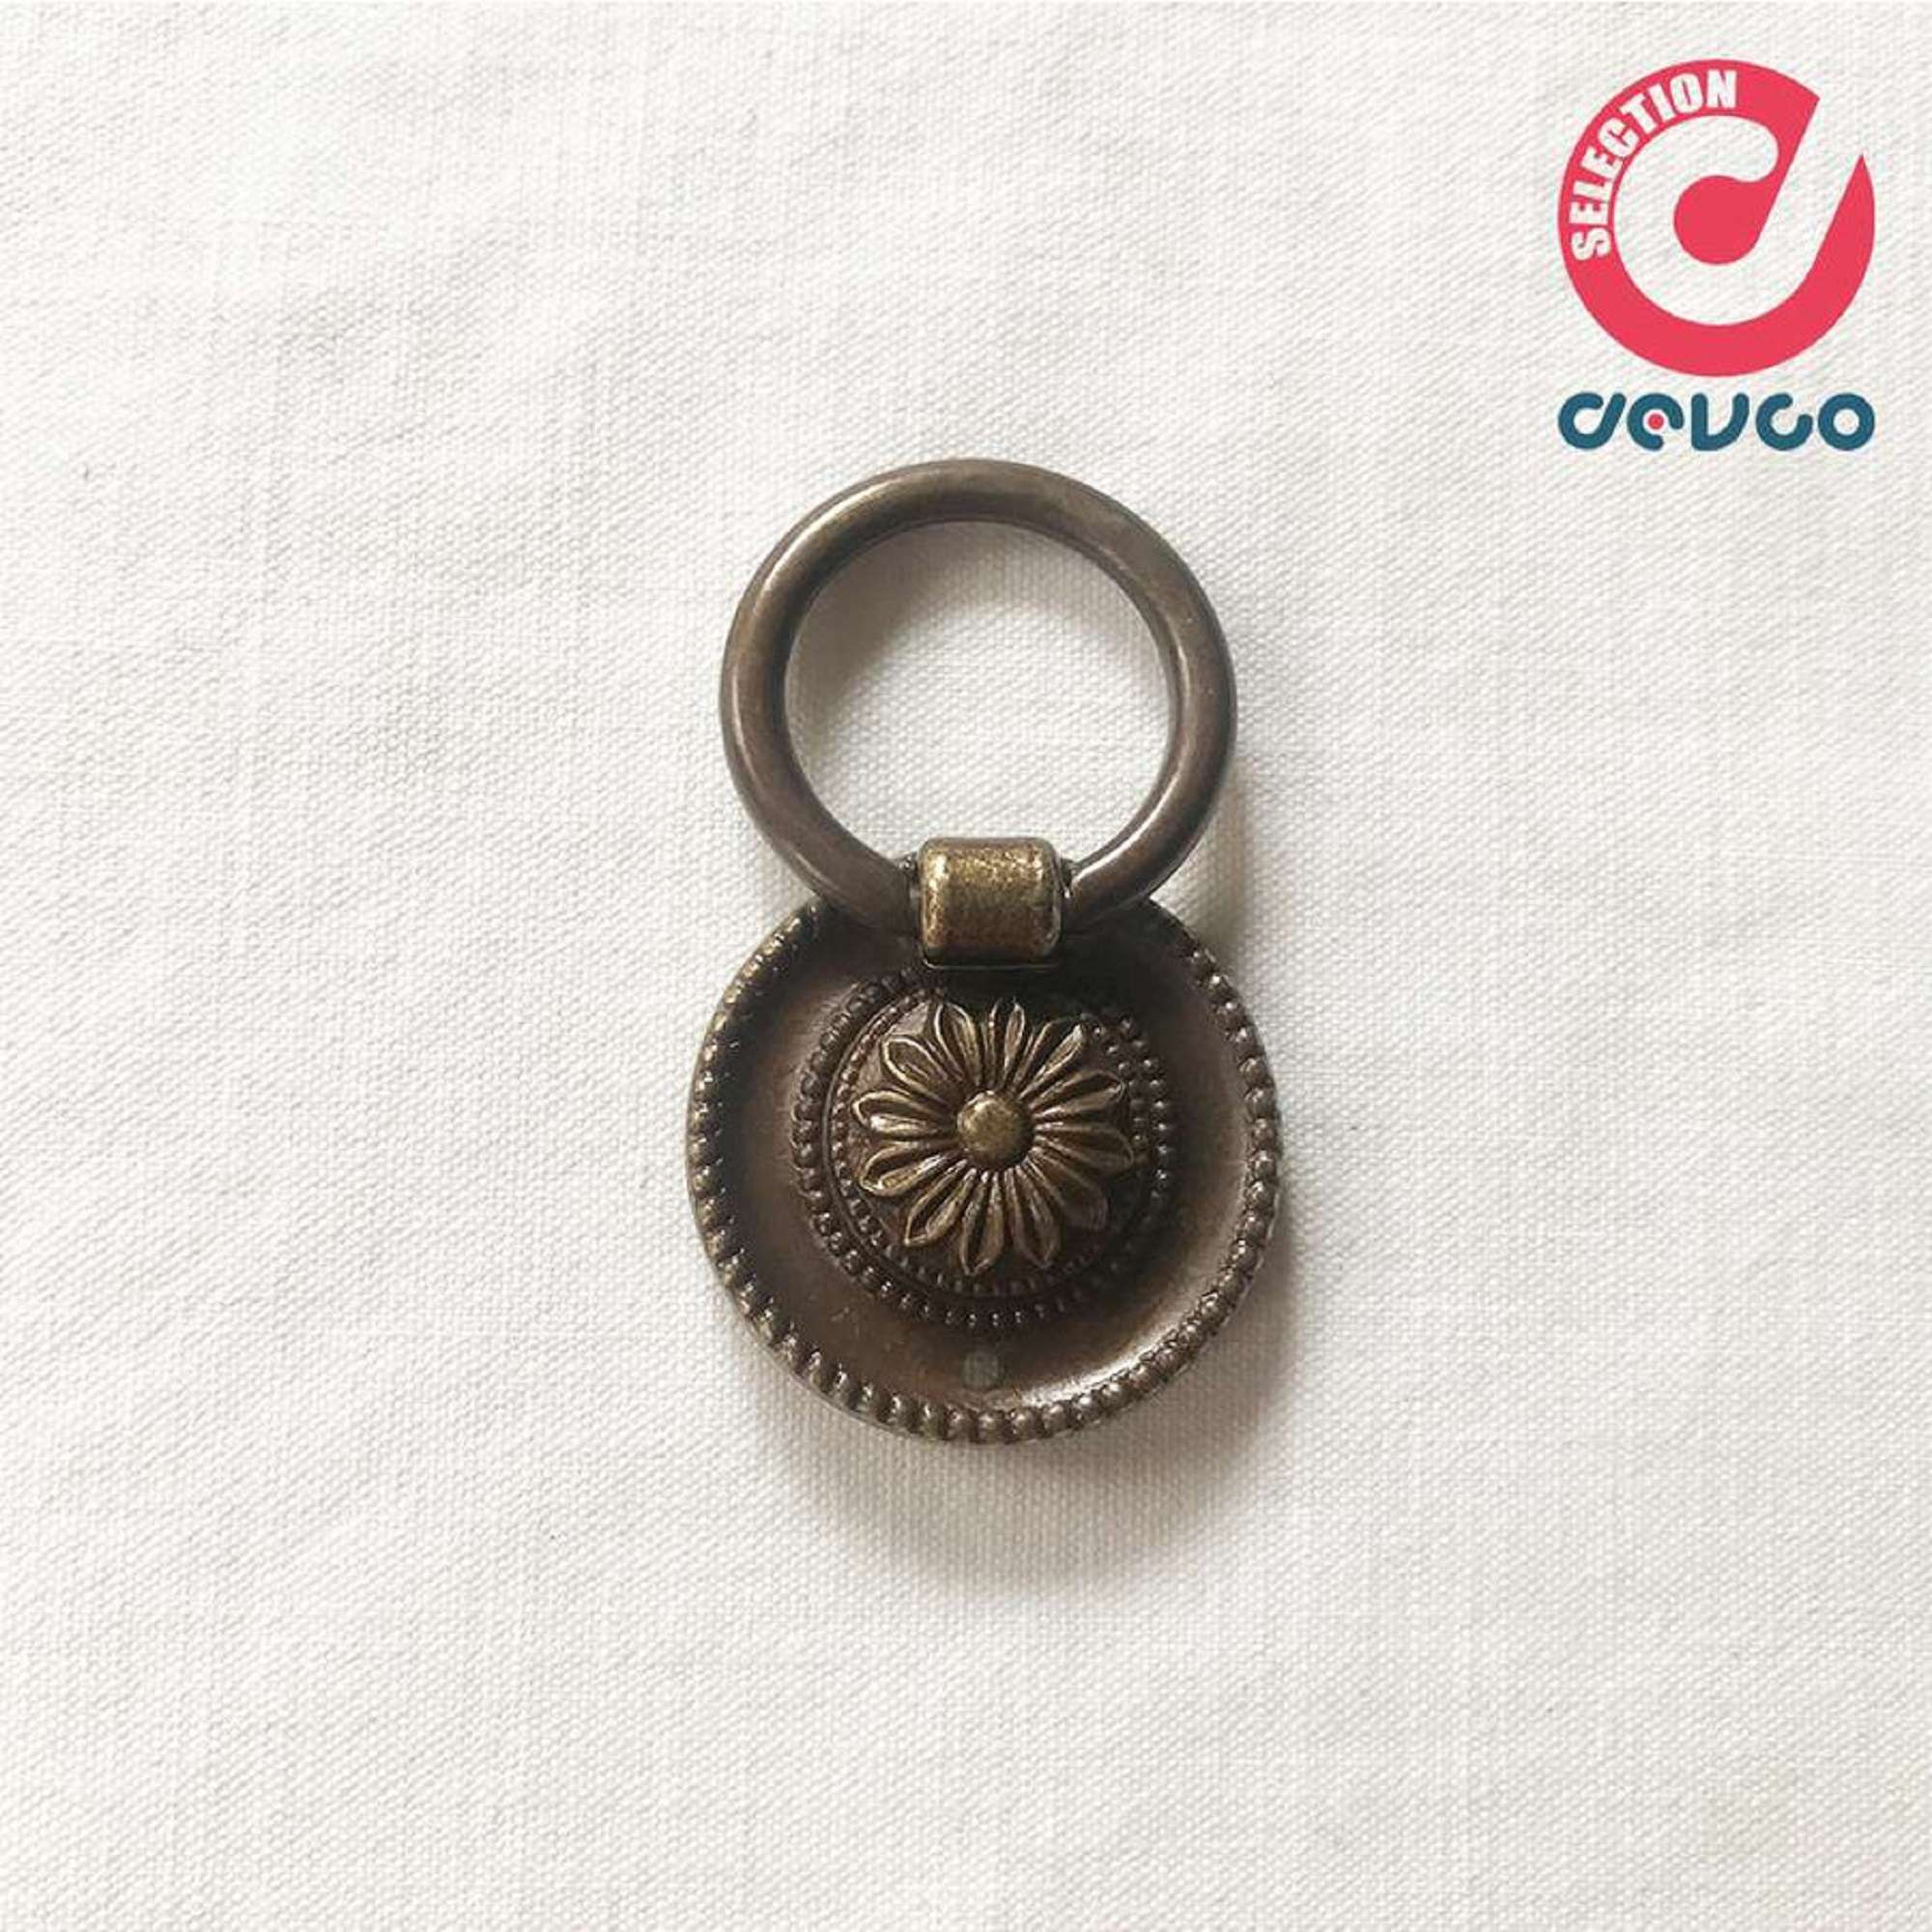 Antique bronze knob - Omp Porro  0650 (32-39)